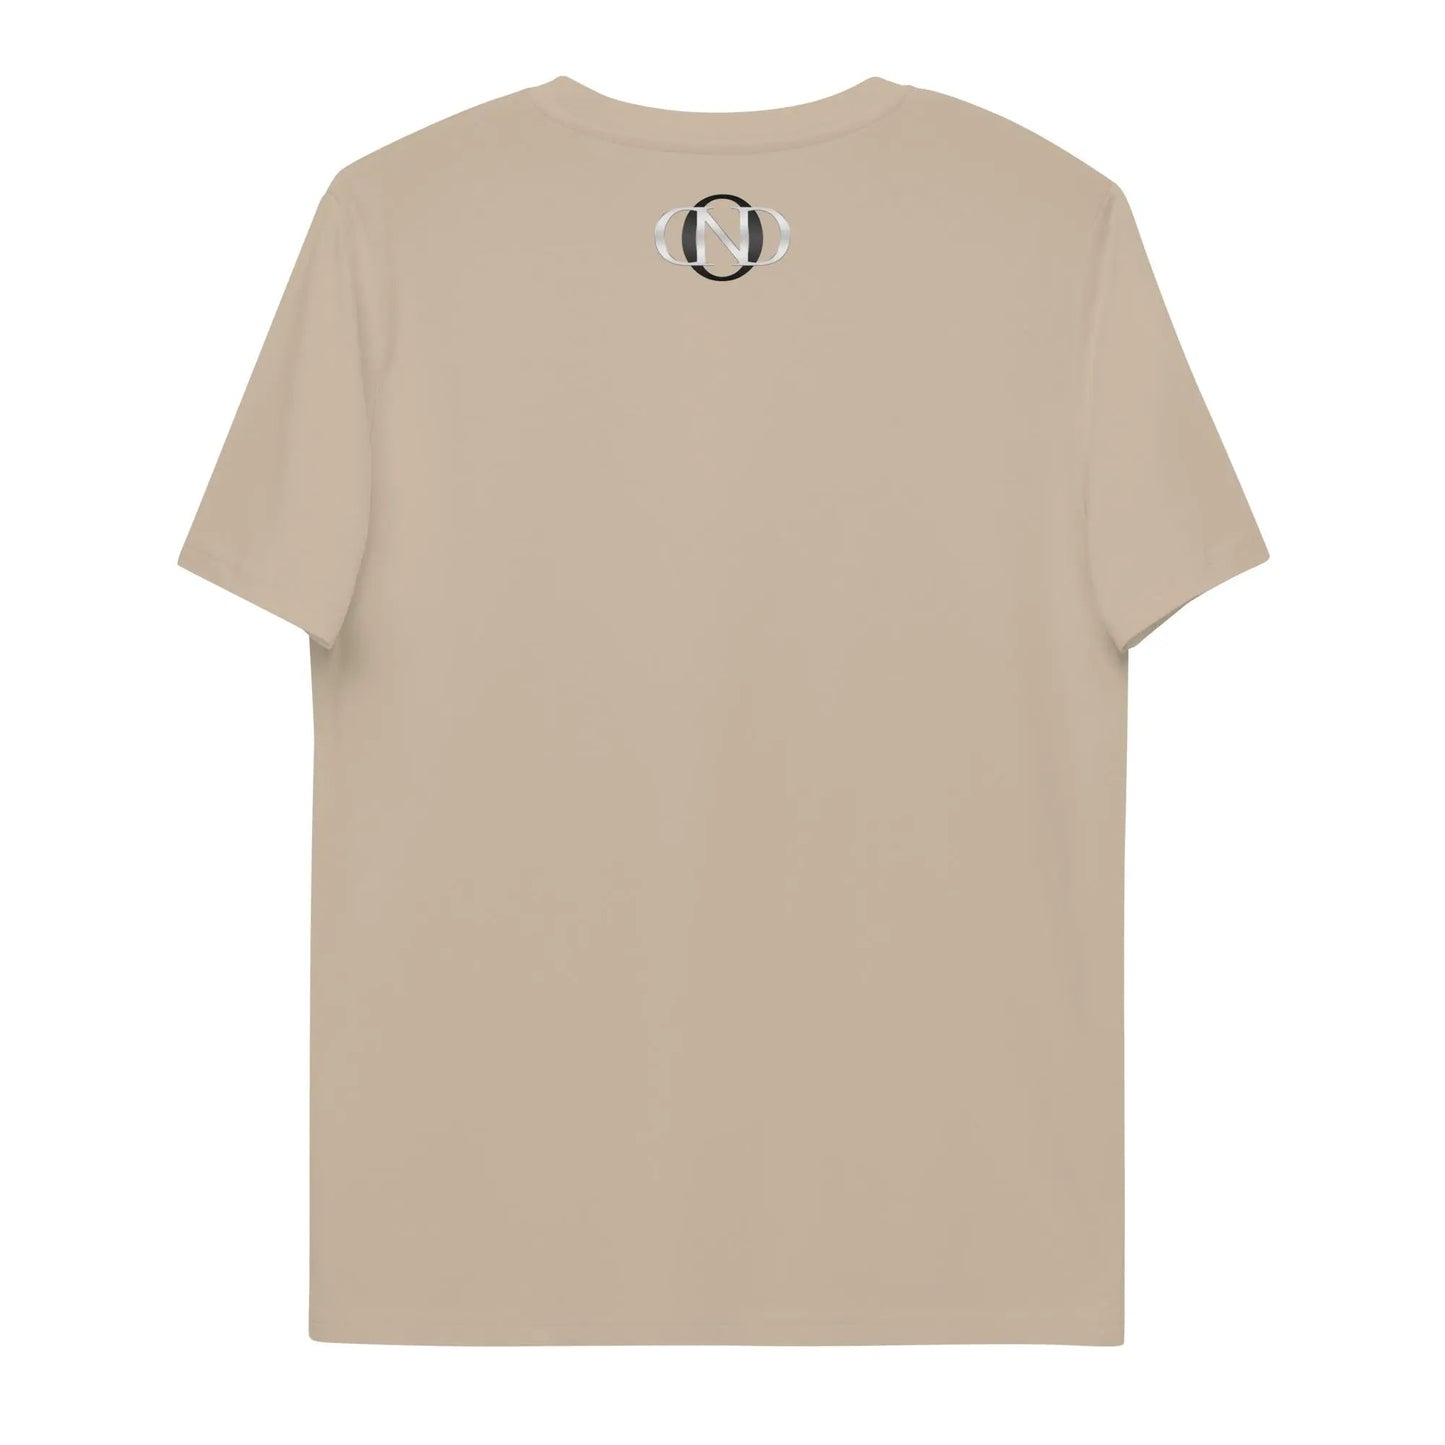 21 Neduz Designs Unisex Socialliberalerna T-Shirt - 100%